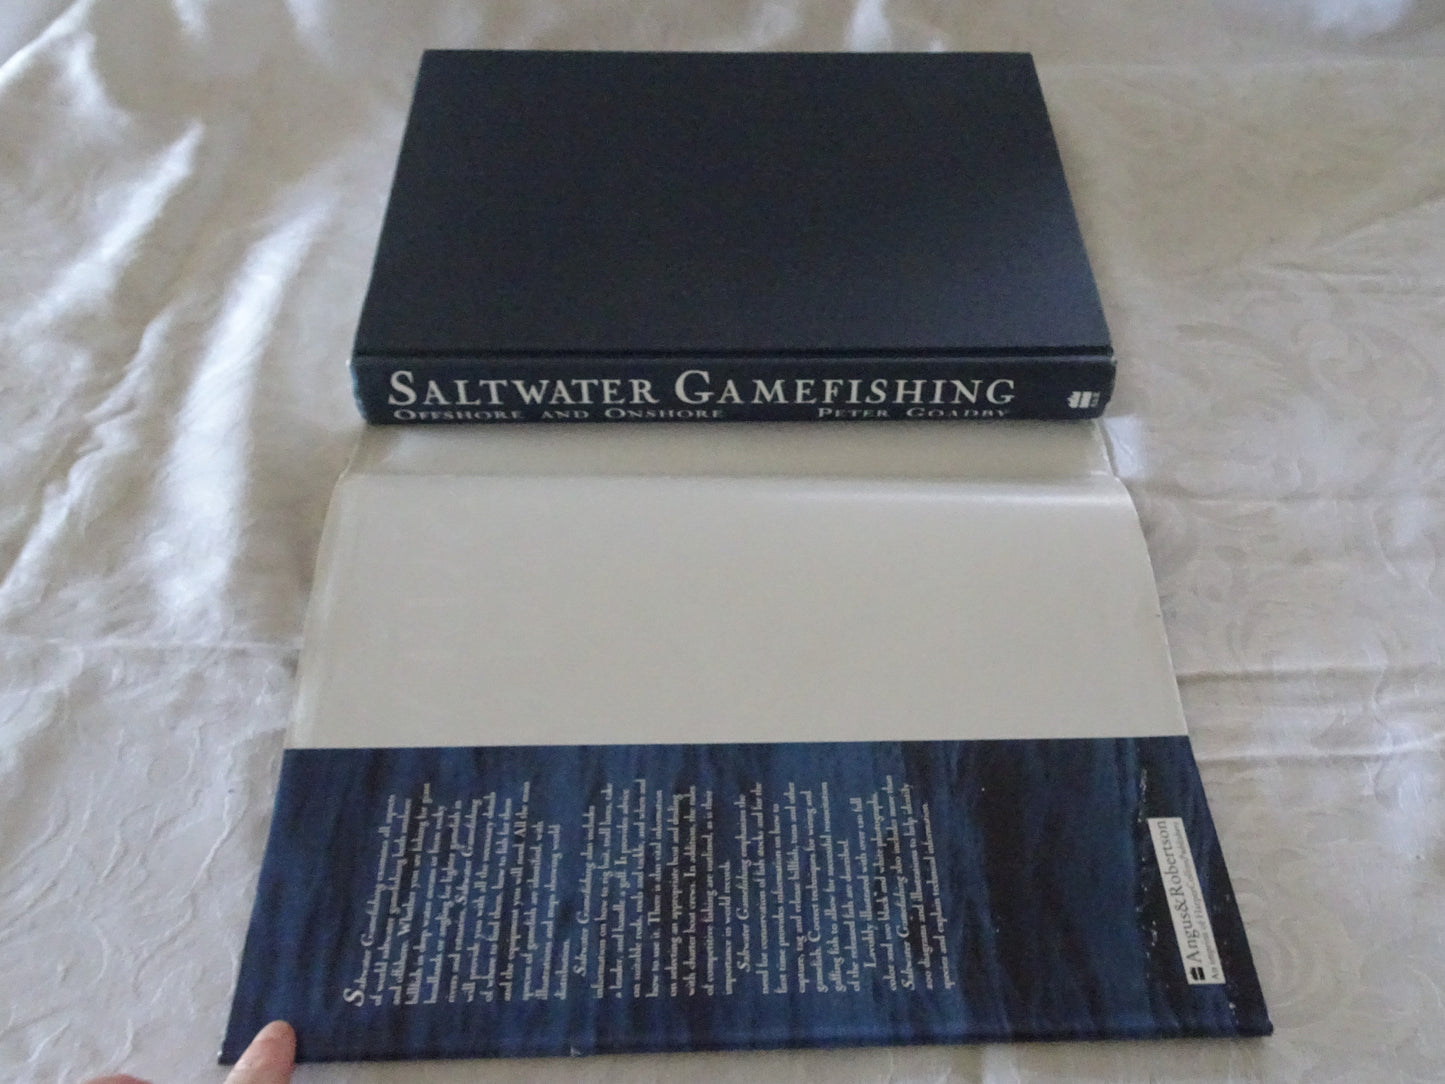 Saltwater Gamefishing by Peter Goadby